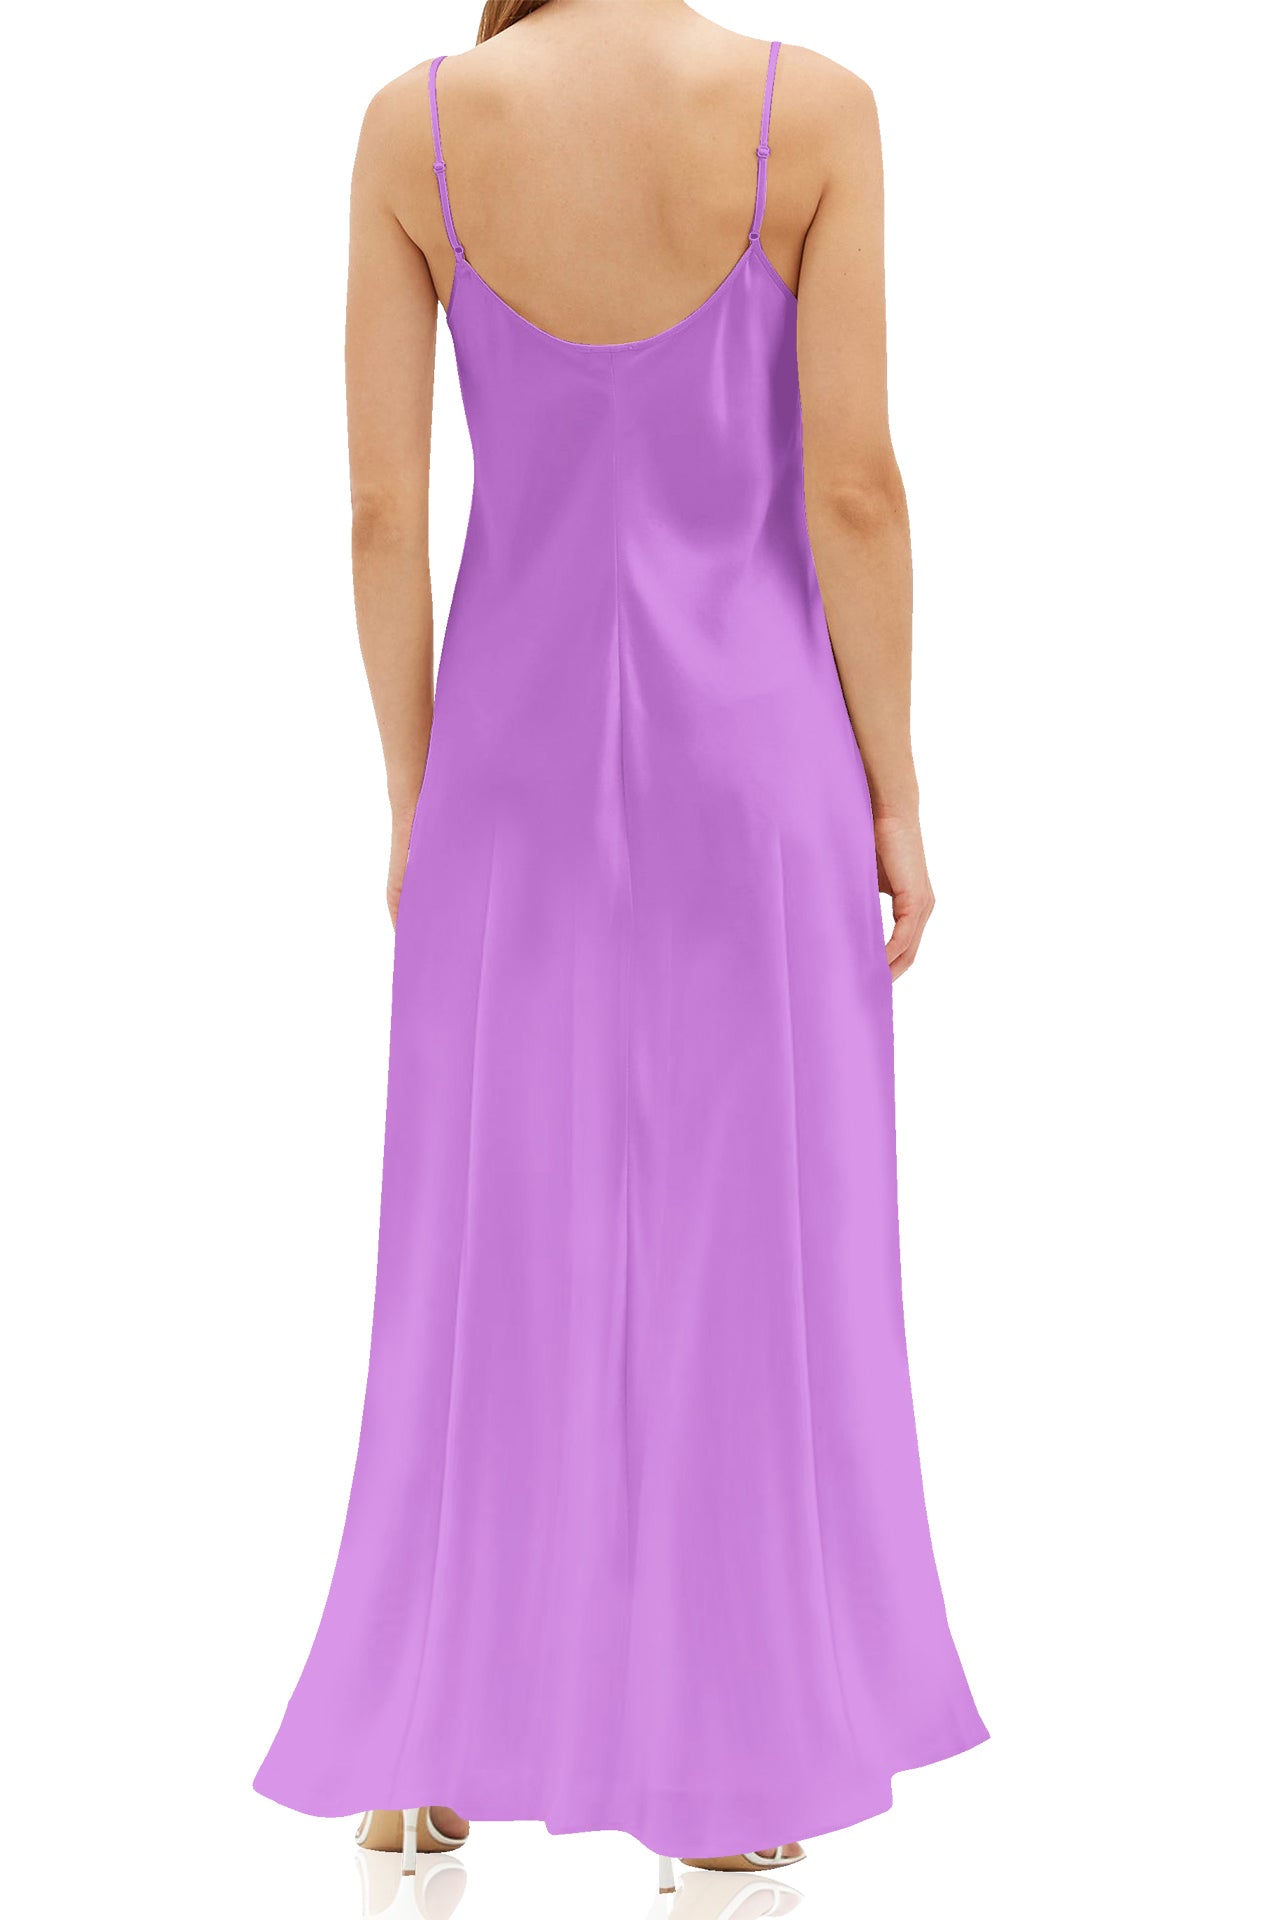 "maxi dress cami" "purple maxi slip dress," "long camisole dress" "Kyle X Shahida"